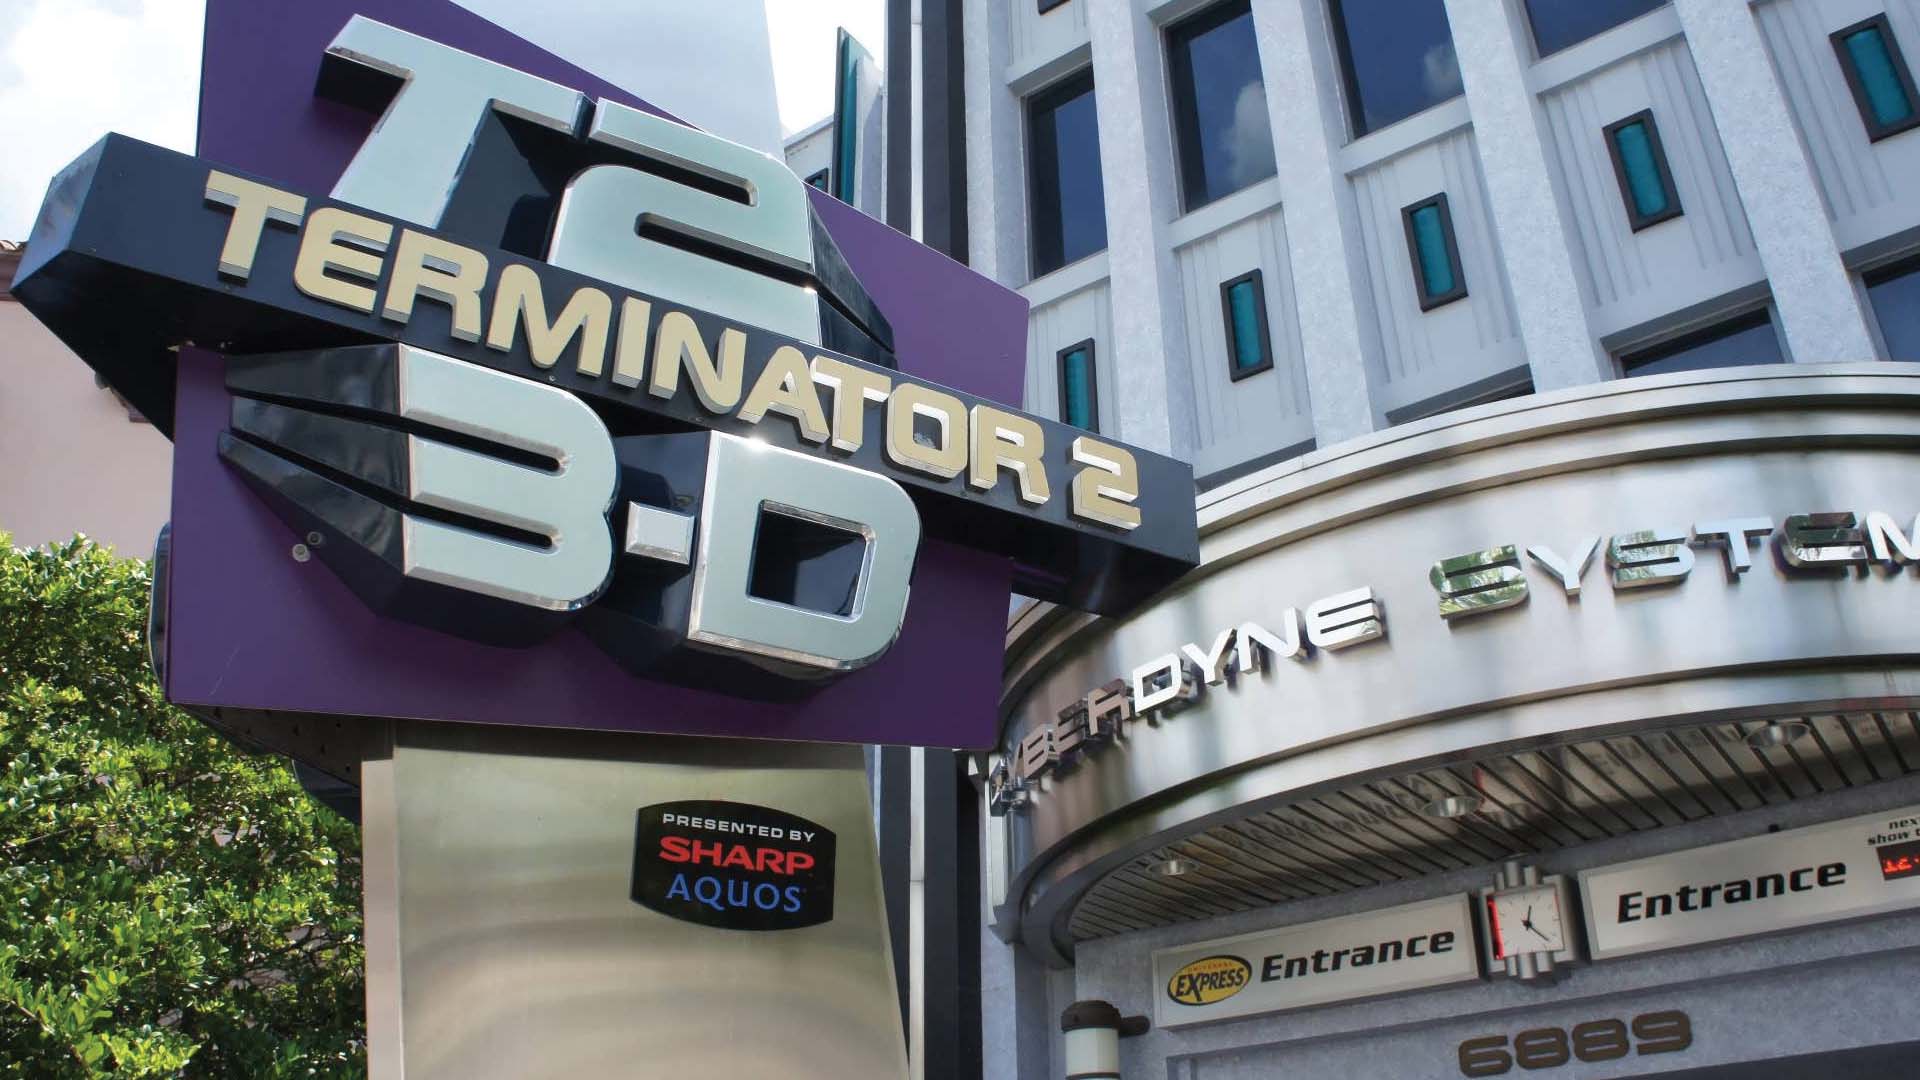 Terminator 2: 3D Attraction